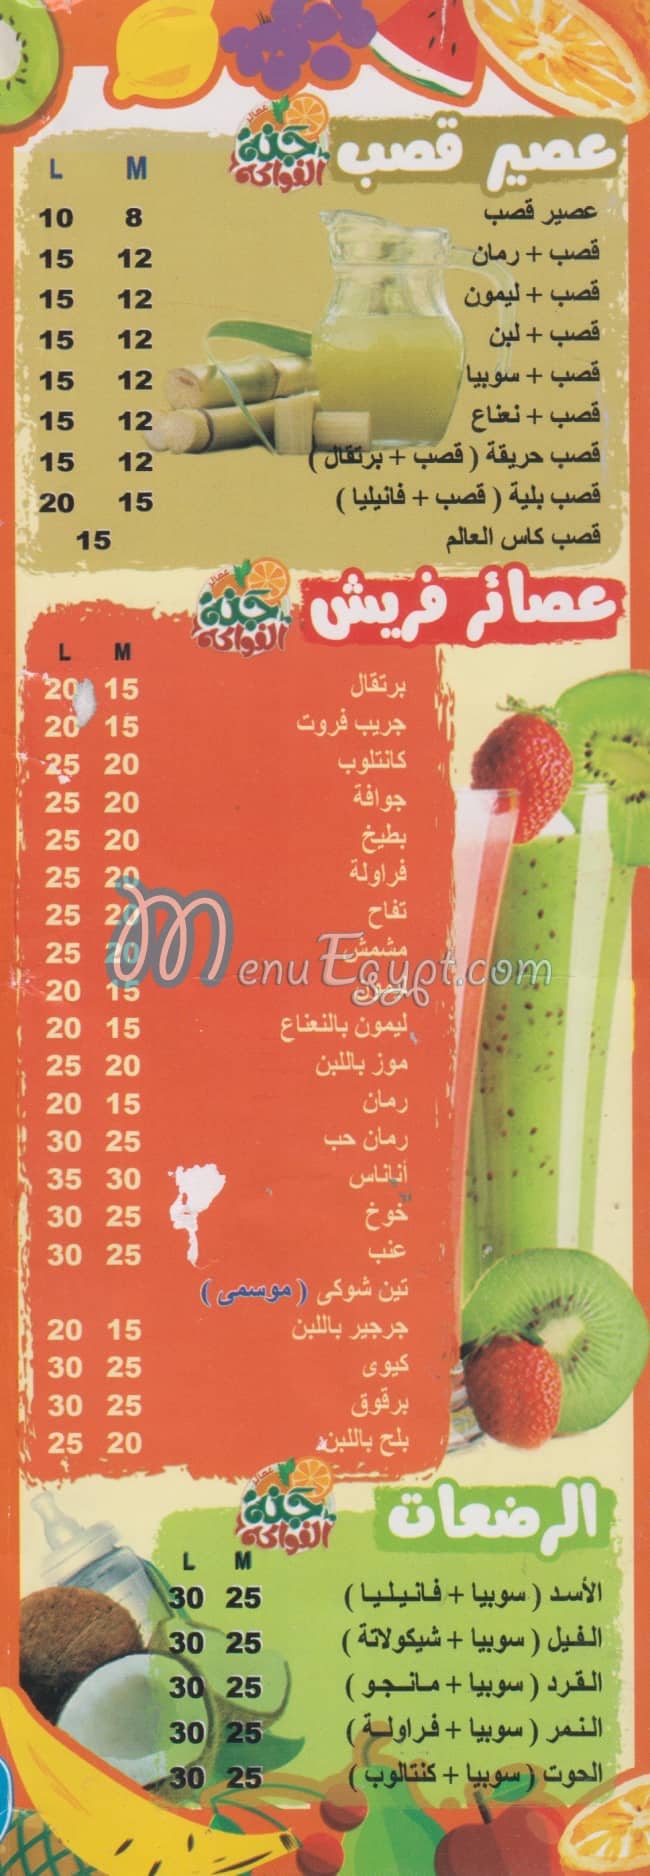 رقم جنه الفواكه مصر